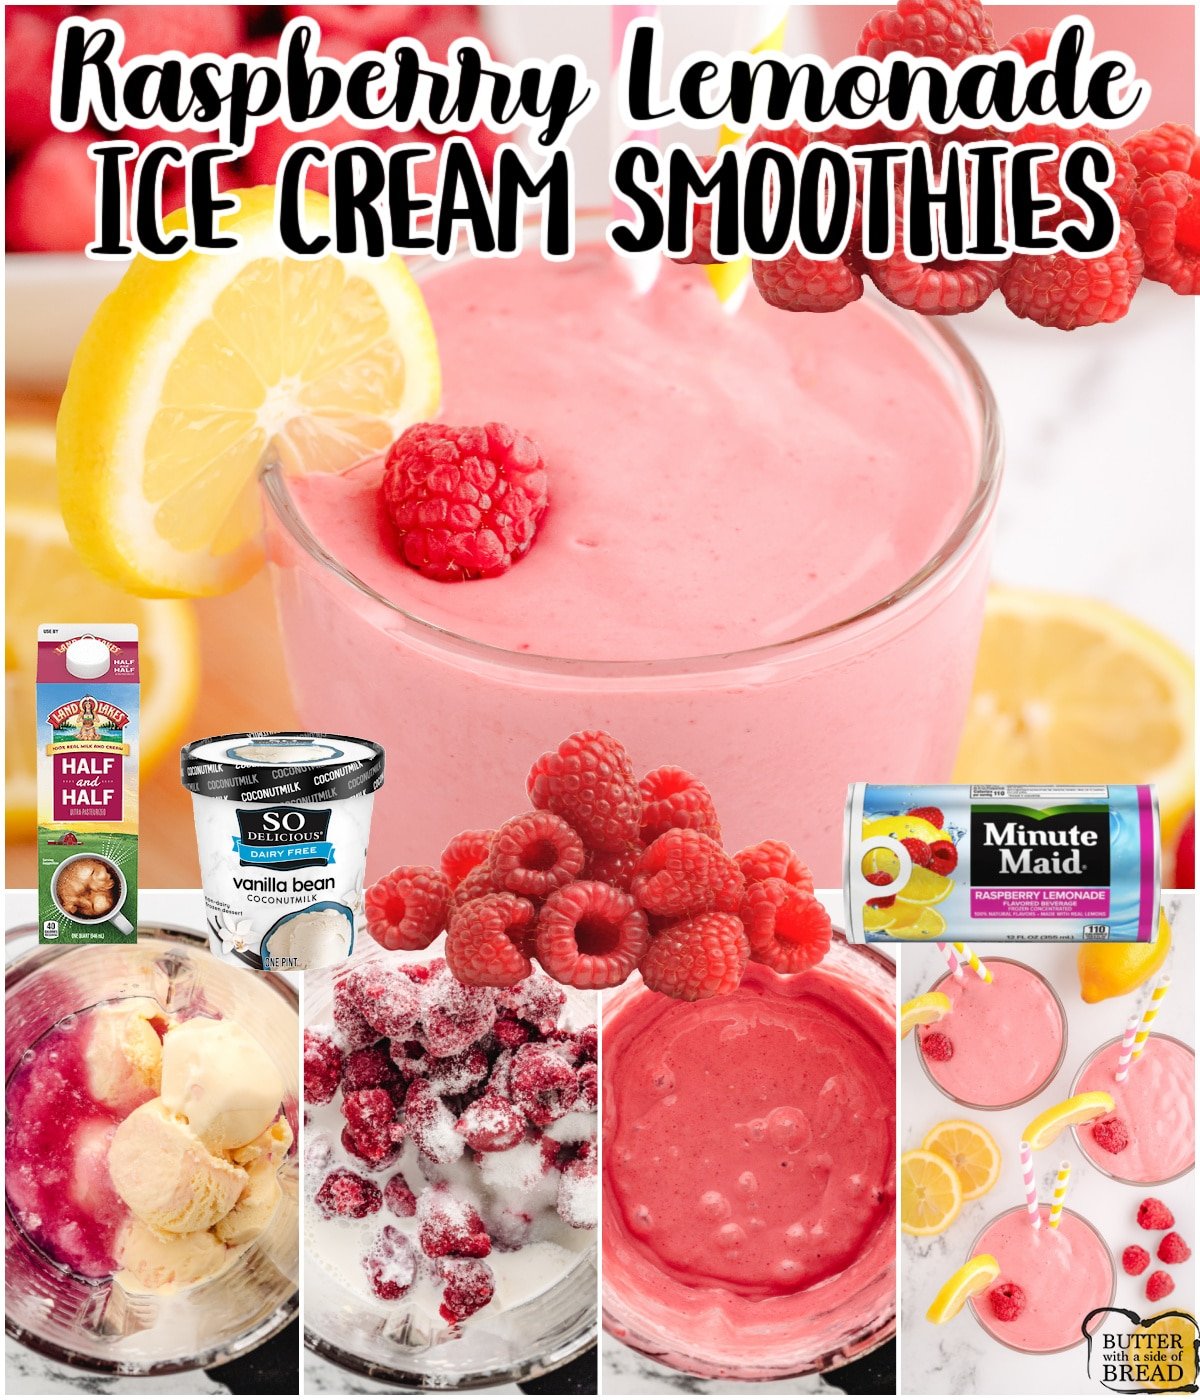 Raspberry Lemonade Ice Cream Smoothies are refreshing drinks made with raspberry lemonade concentrate, half & half, frozen raspberries & vanilla ice cream!